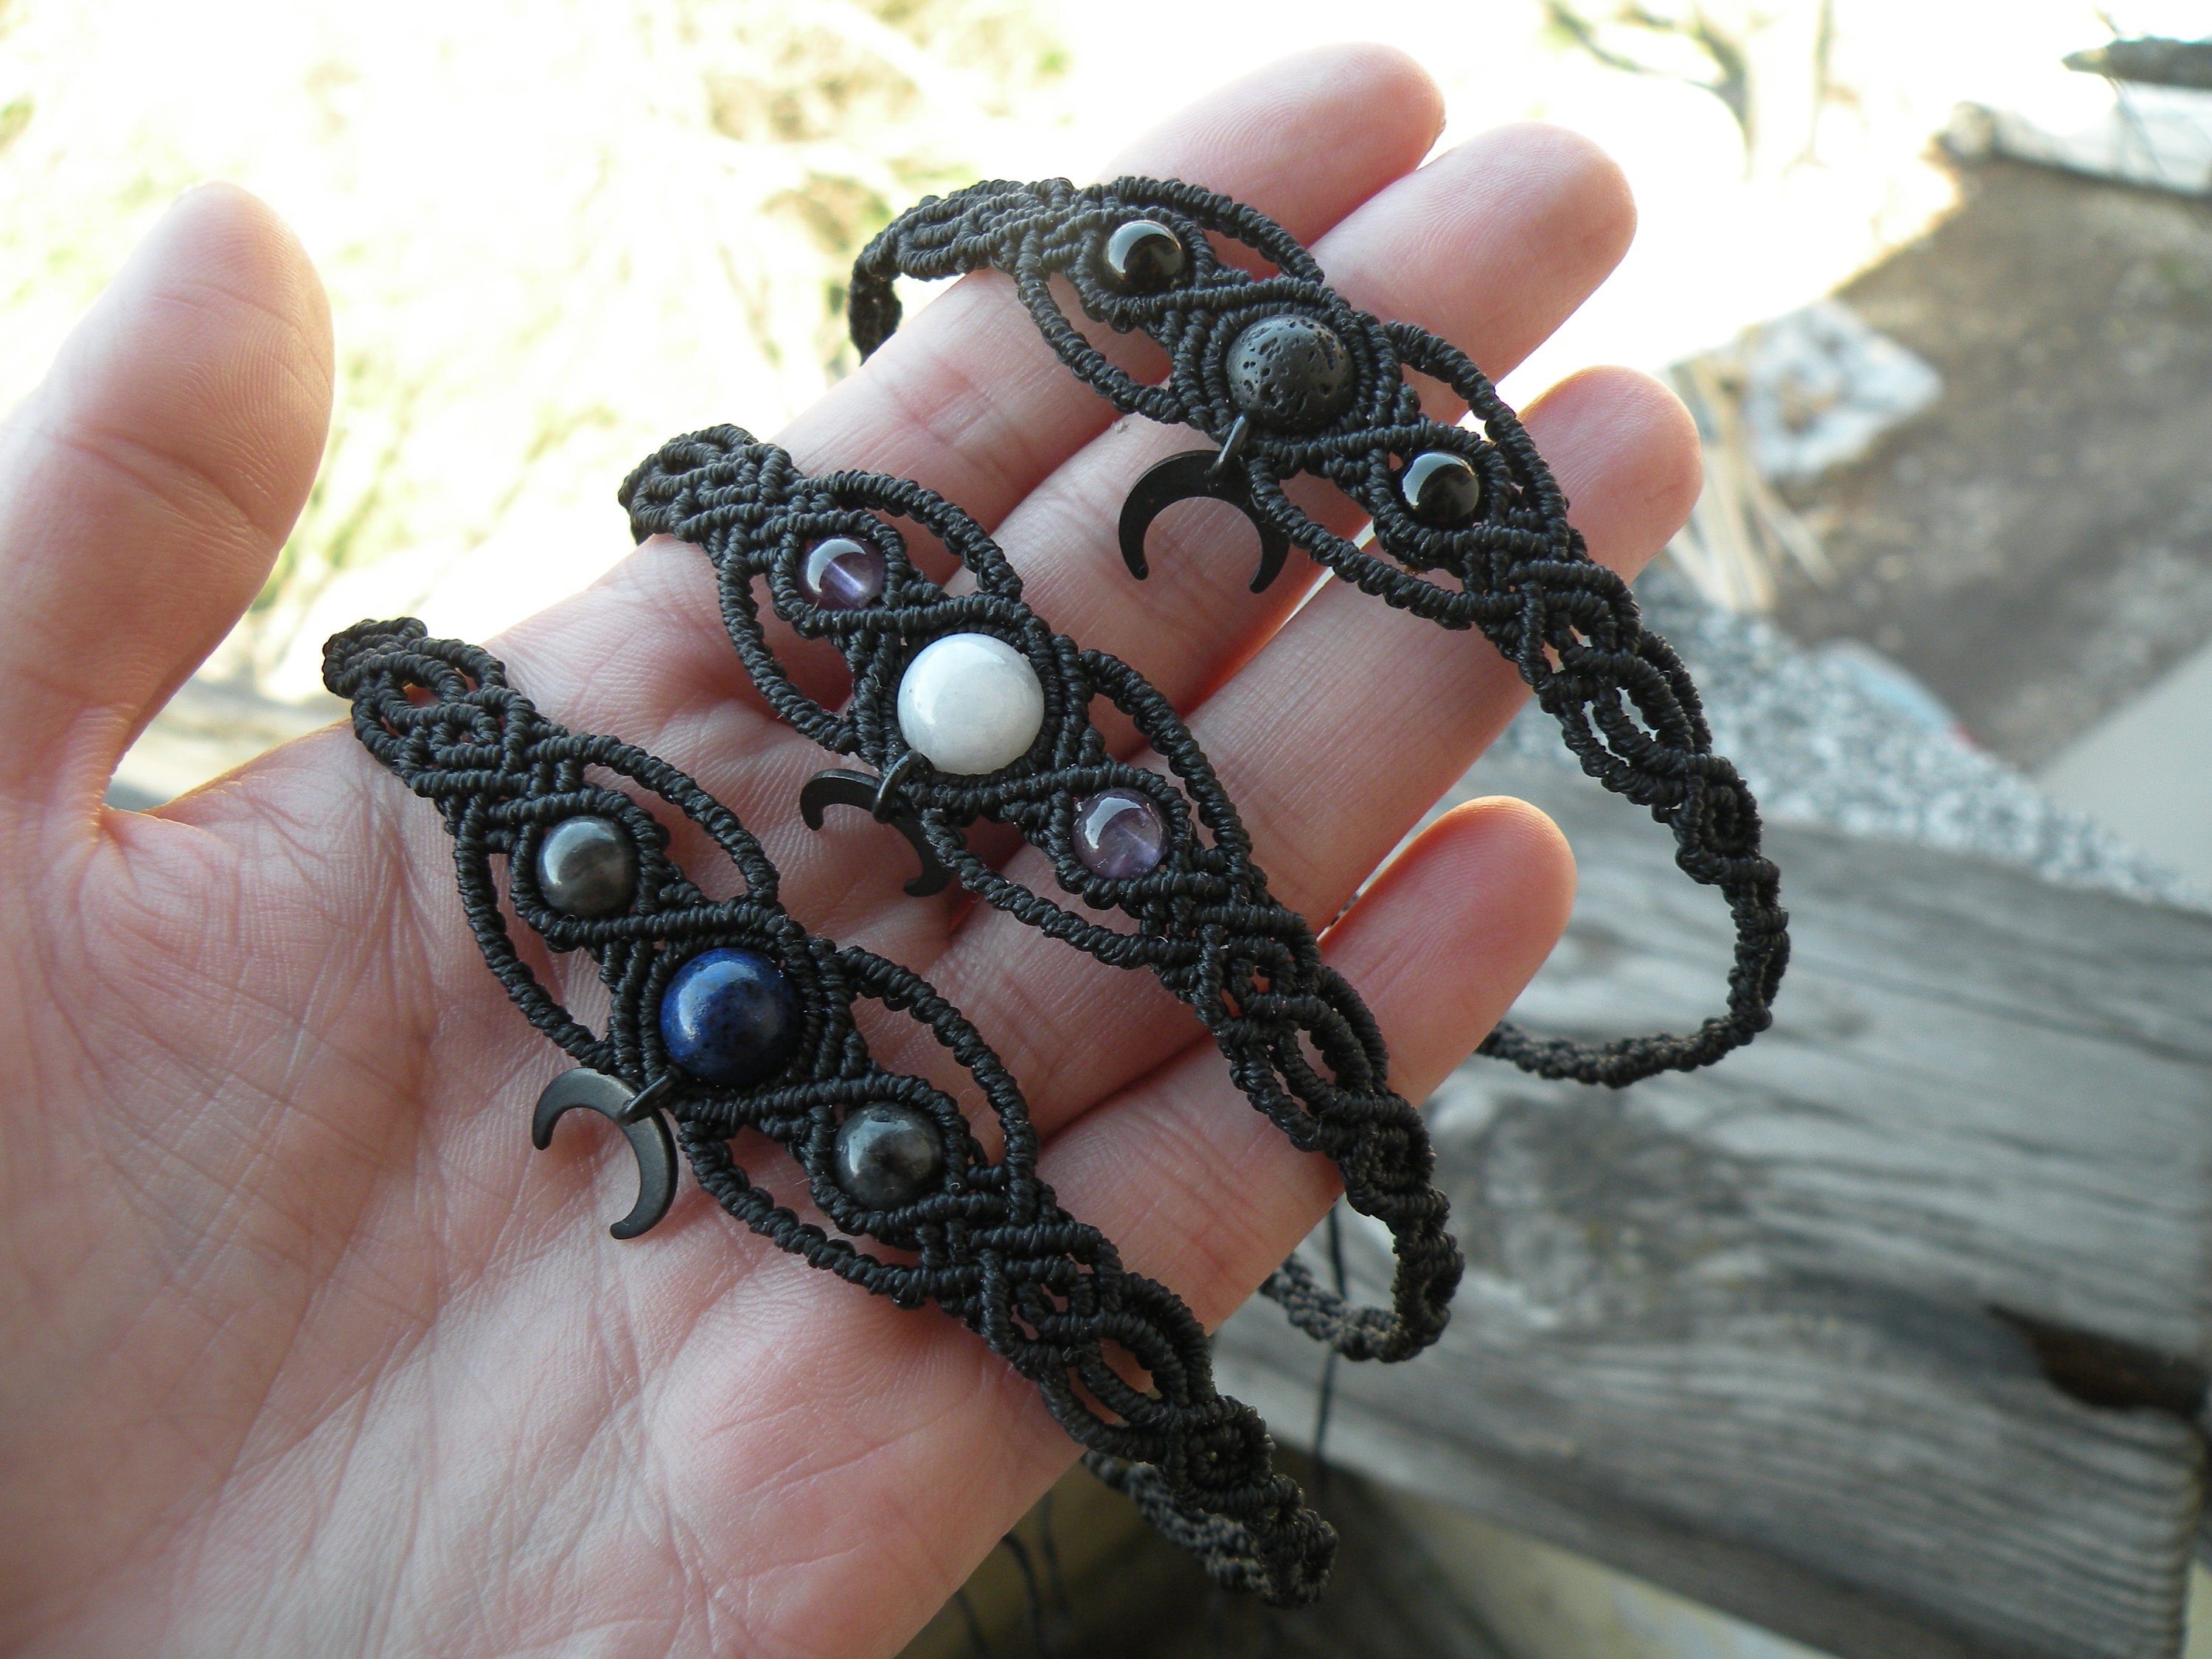 Witches knot woven charm bracelet black adjustable slide bracelet witchy  gift